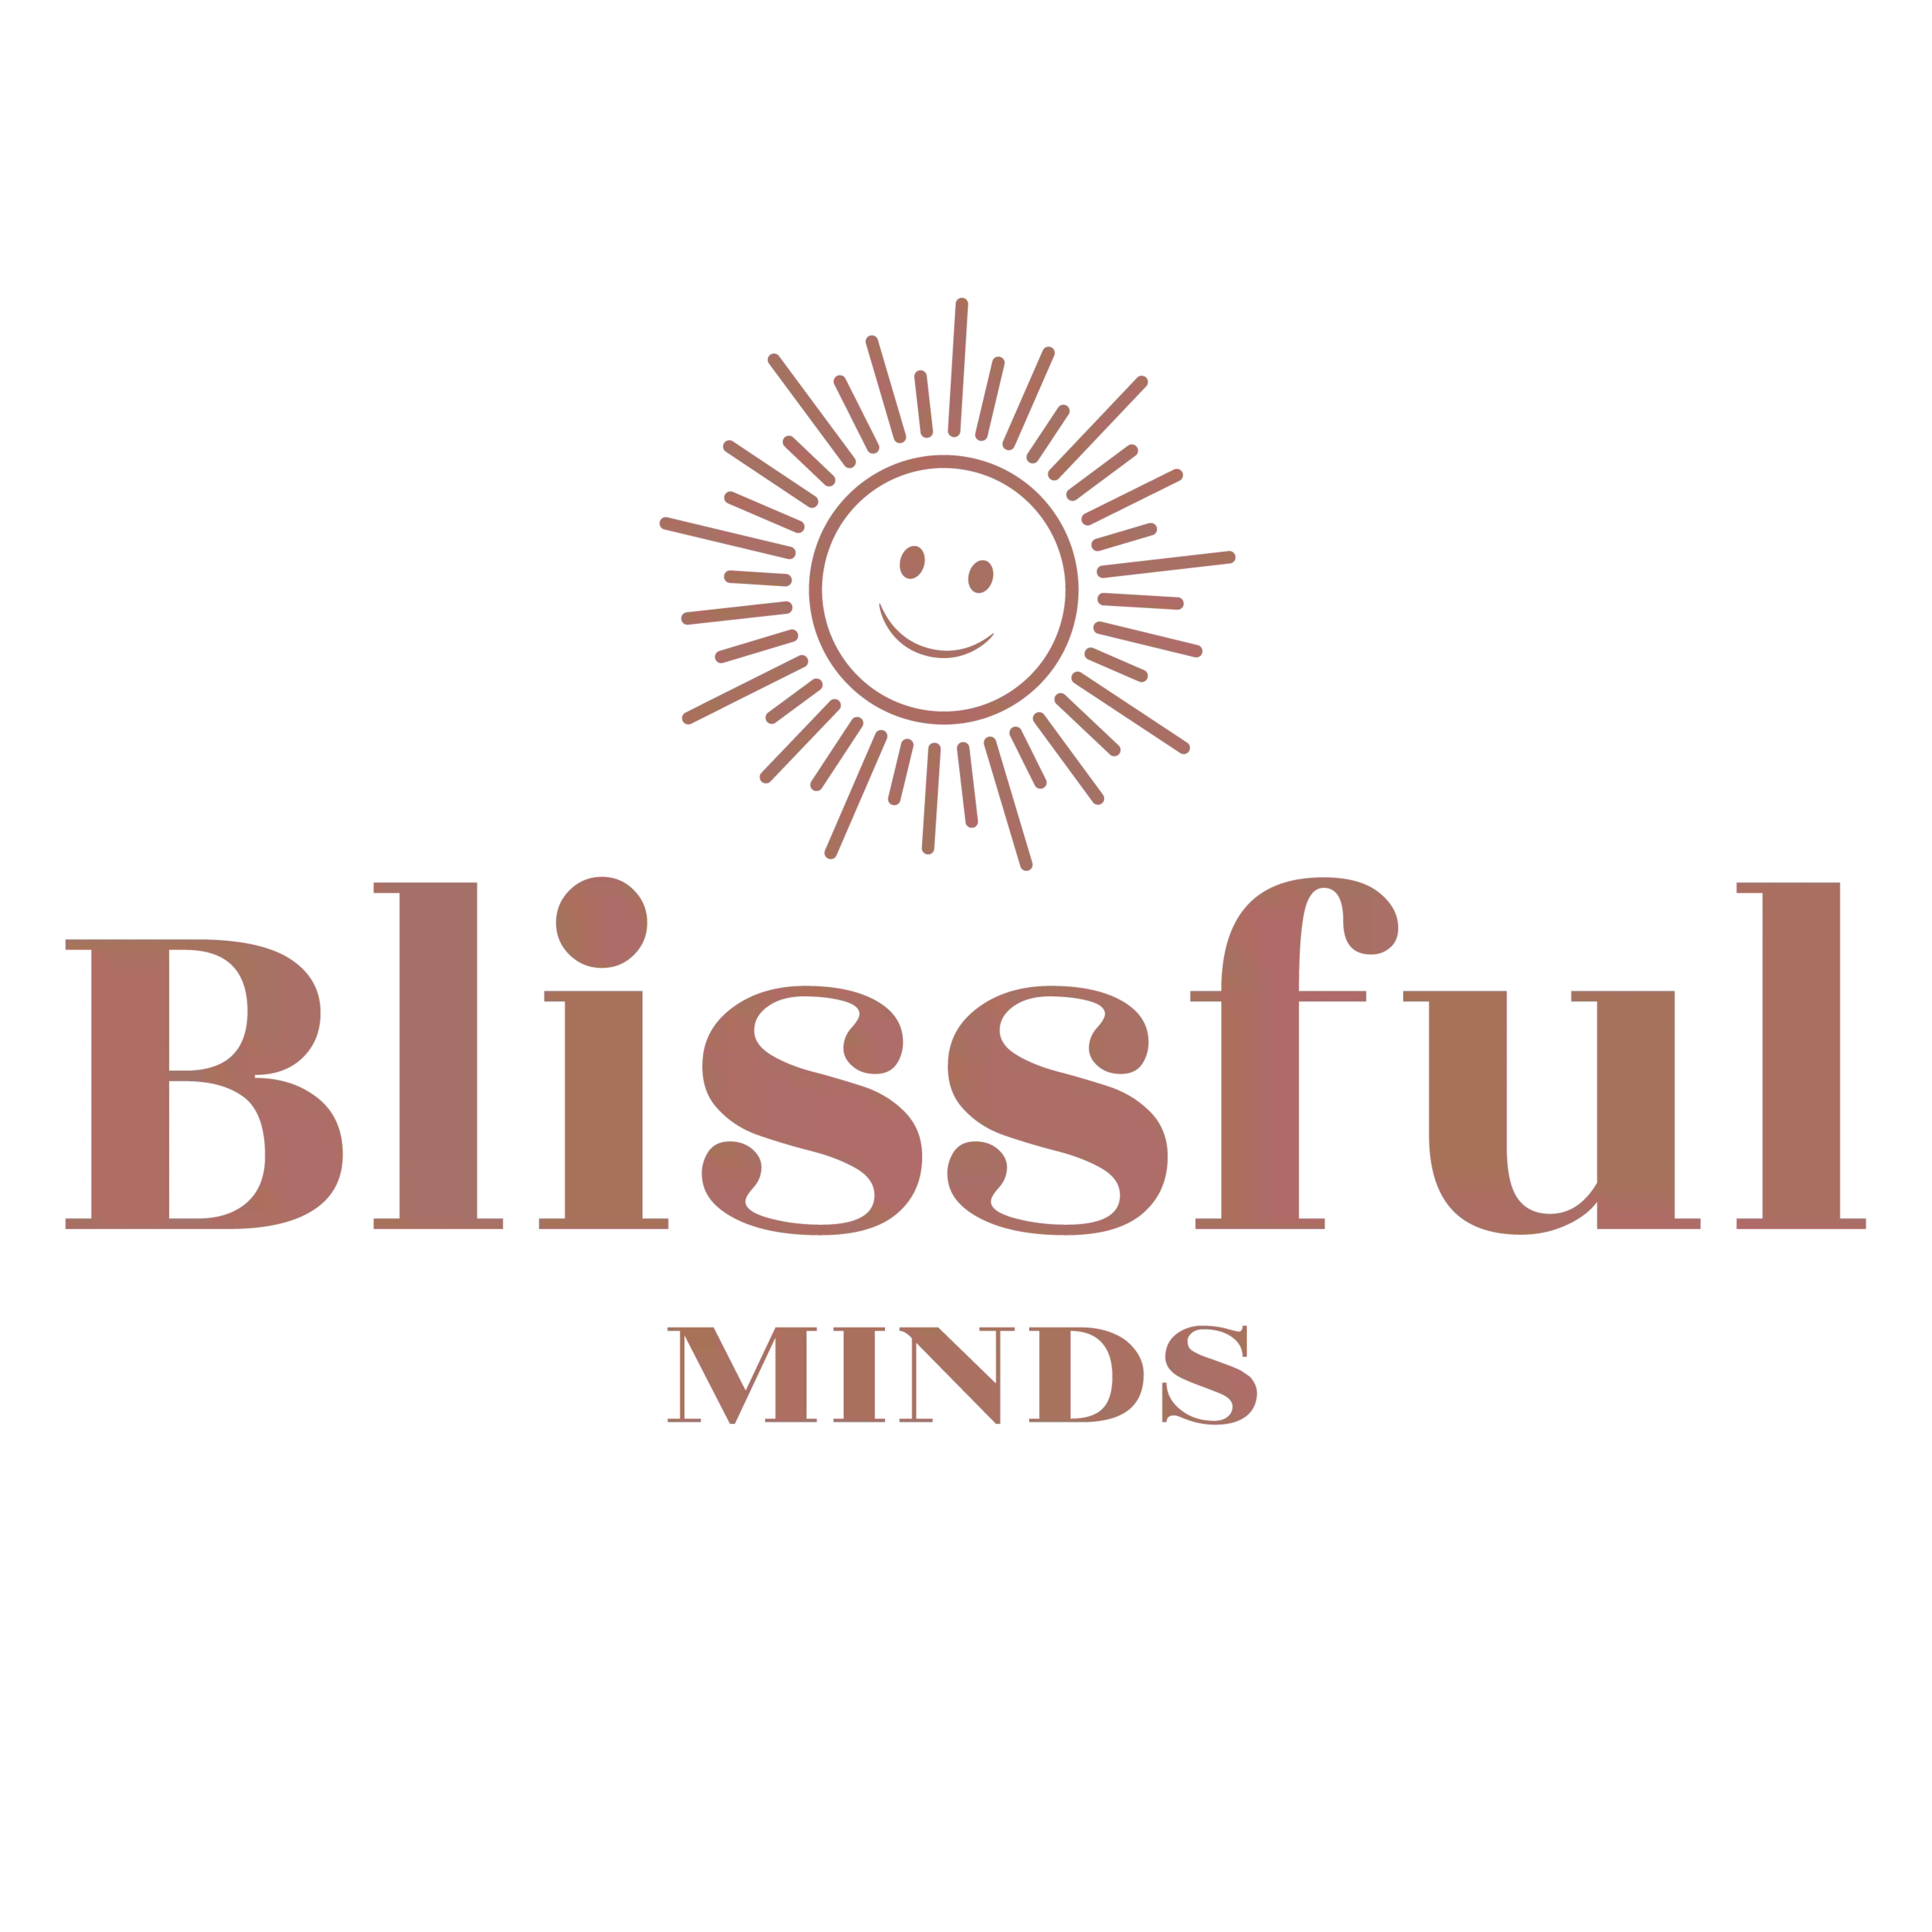 Blissful Minds